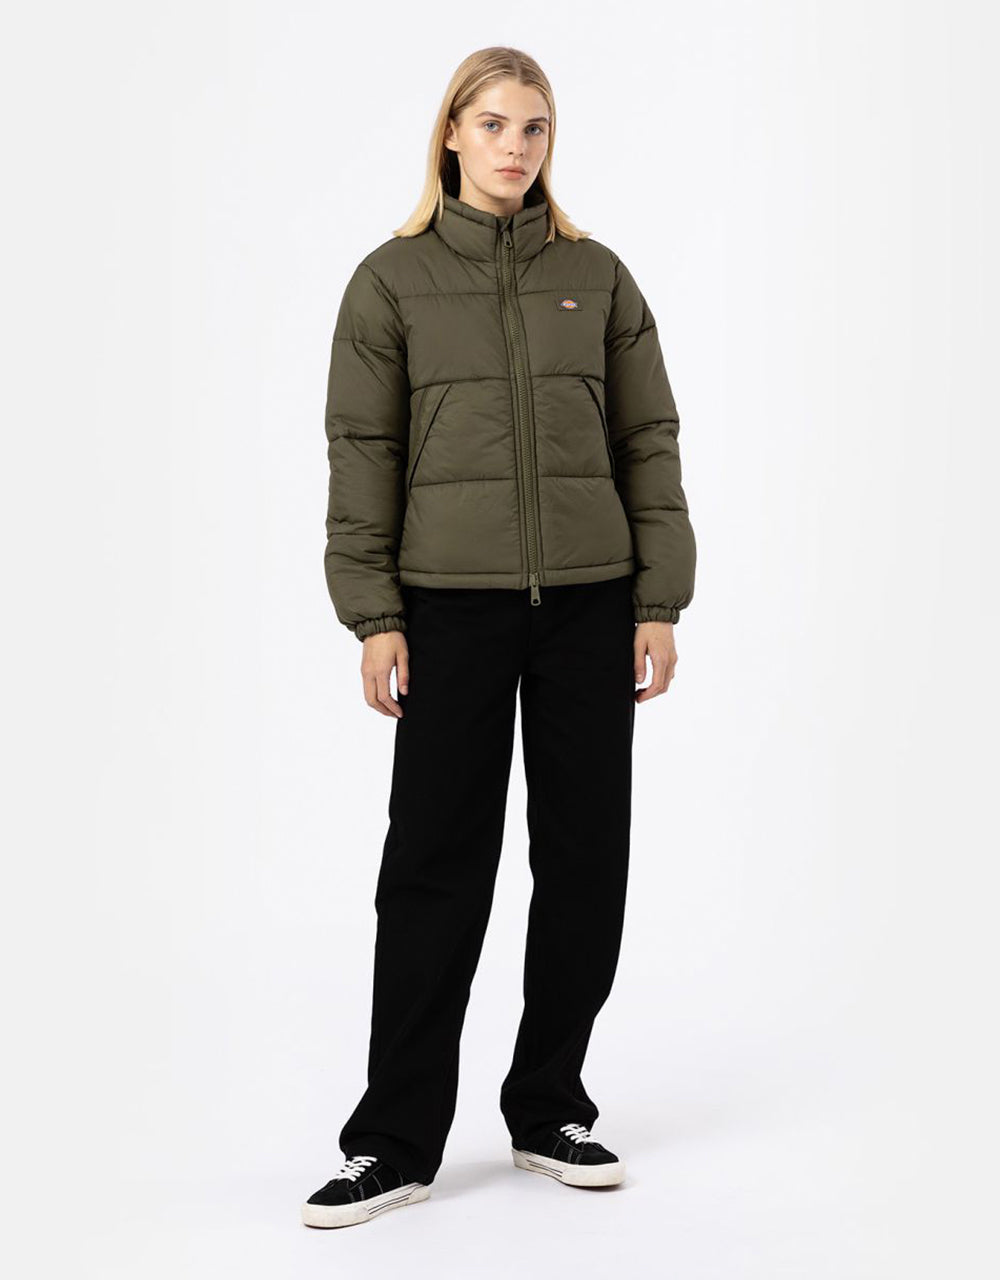 Dickies Womens Alatna Puffer Jacket - Military Green